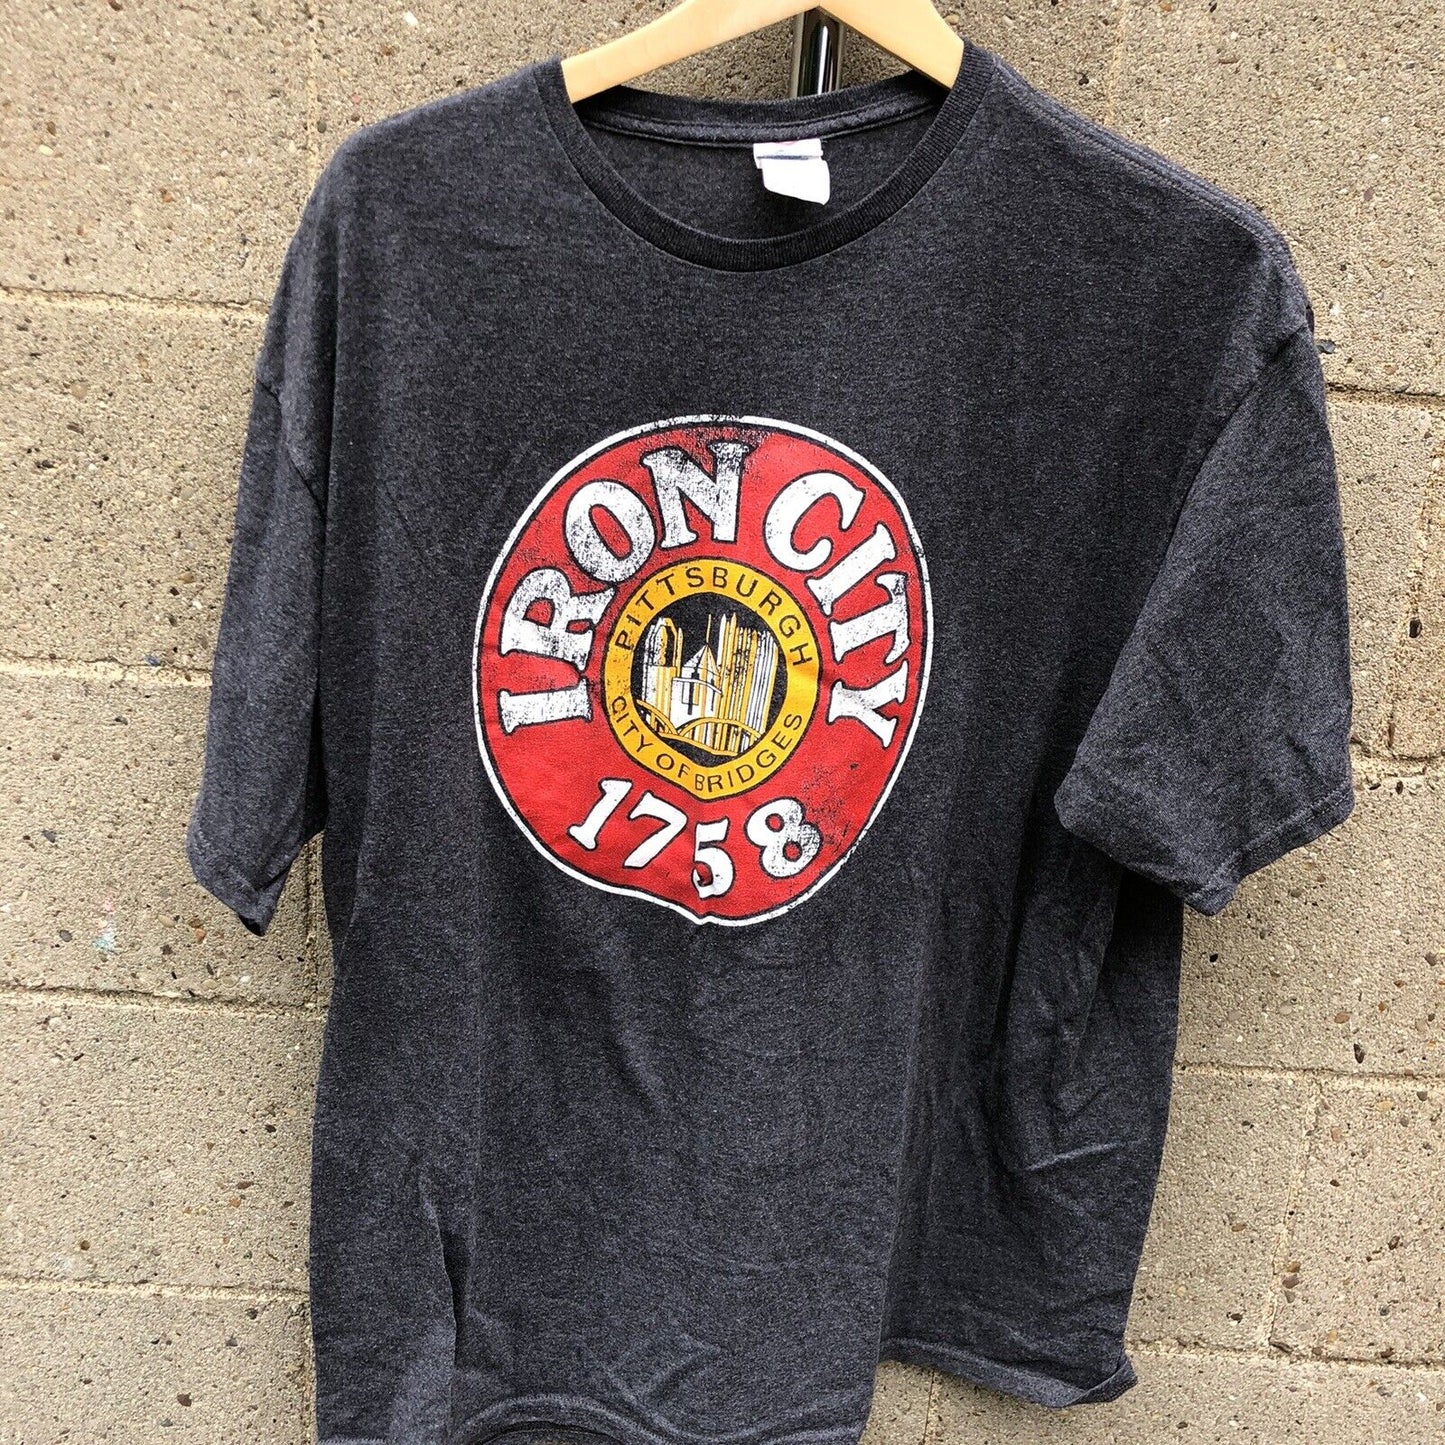 Vintage Iron Ciry Beer Shirt Size Xl